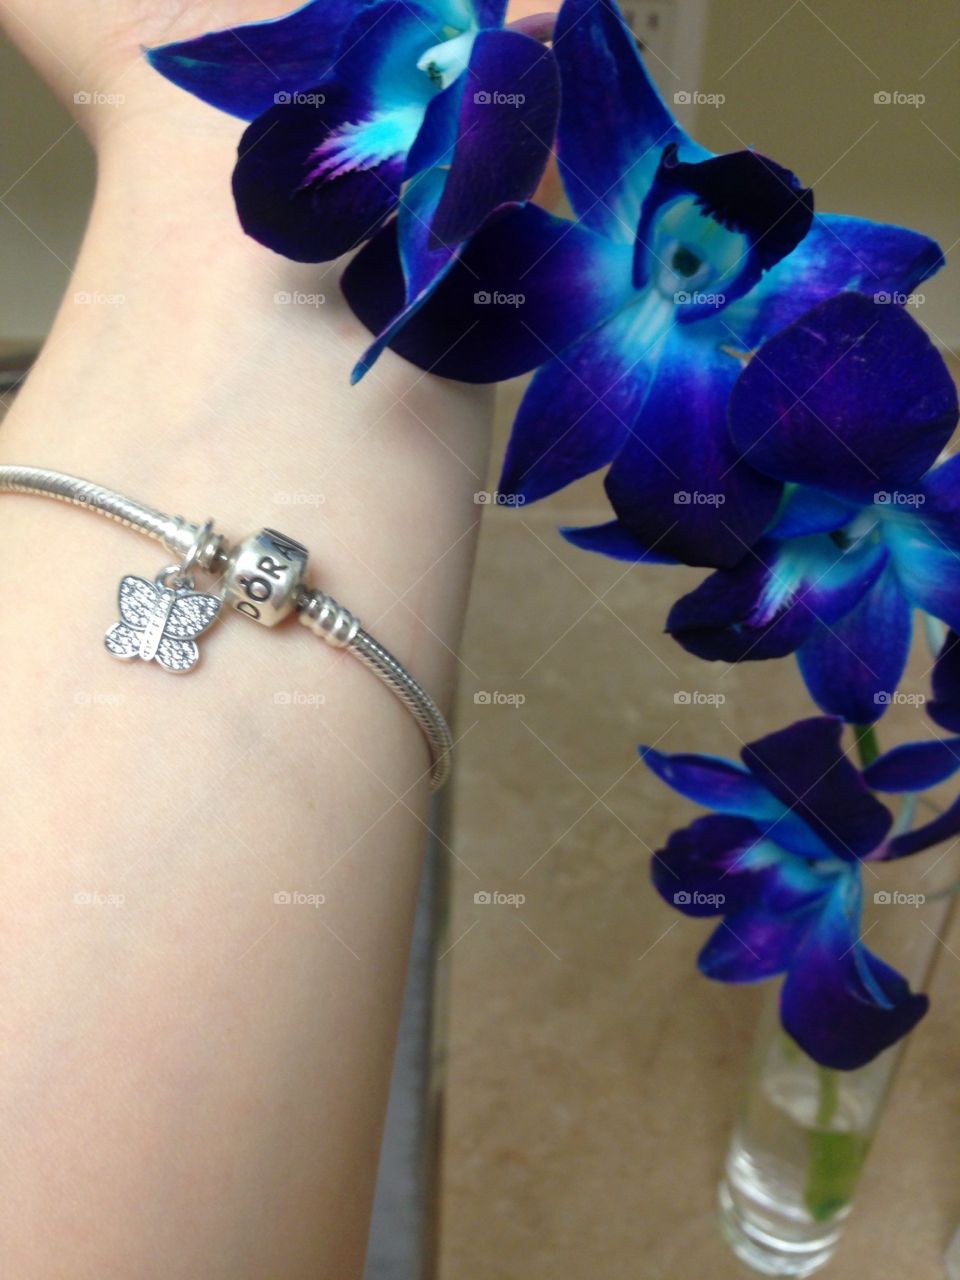 Pandora charm bracelet and blue orchid flower 